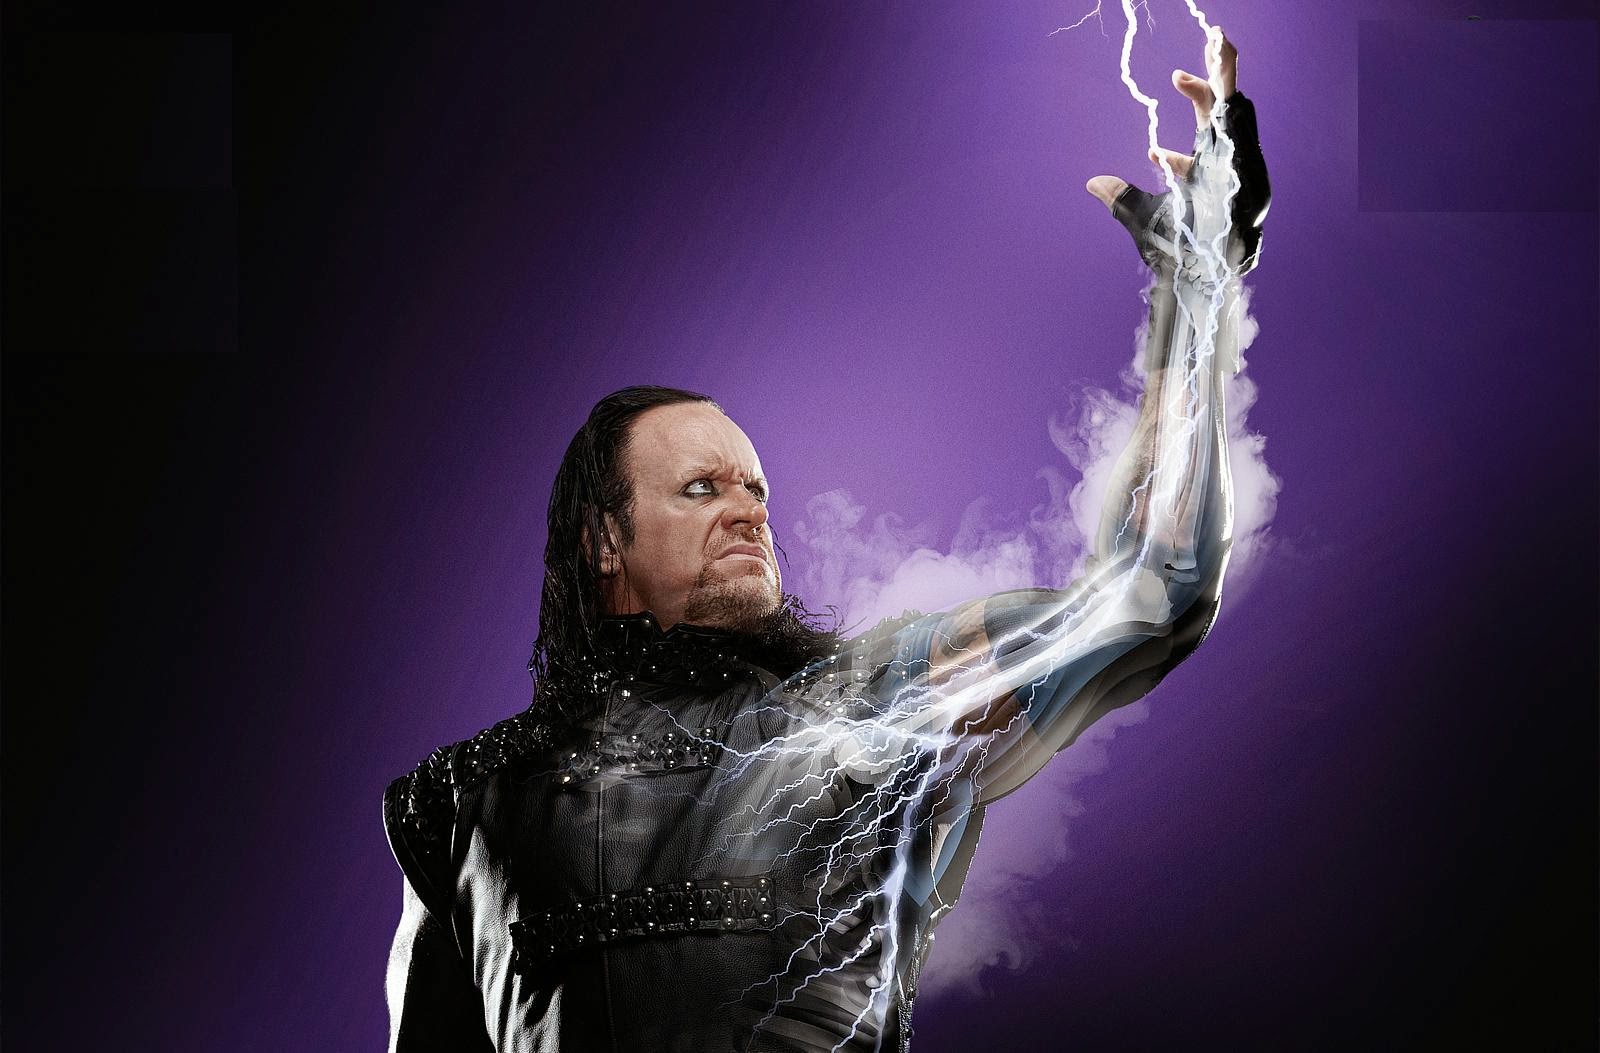 Free download Undertaker Hd Wallpapers Download WWE HD WALLPAPER FREE ...